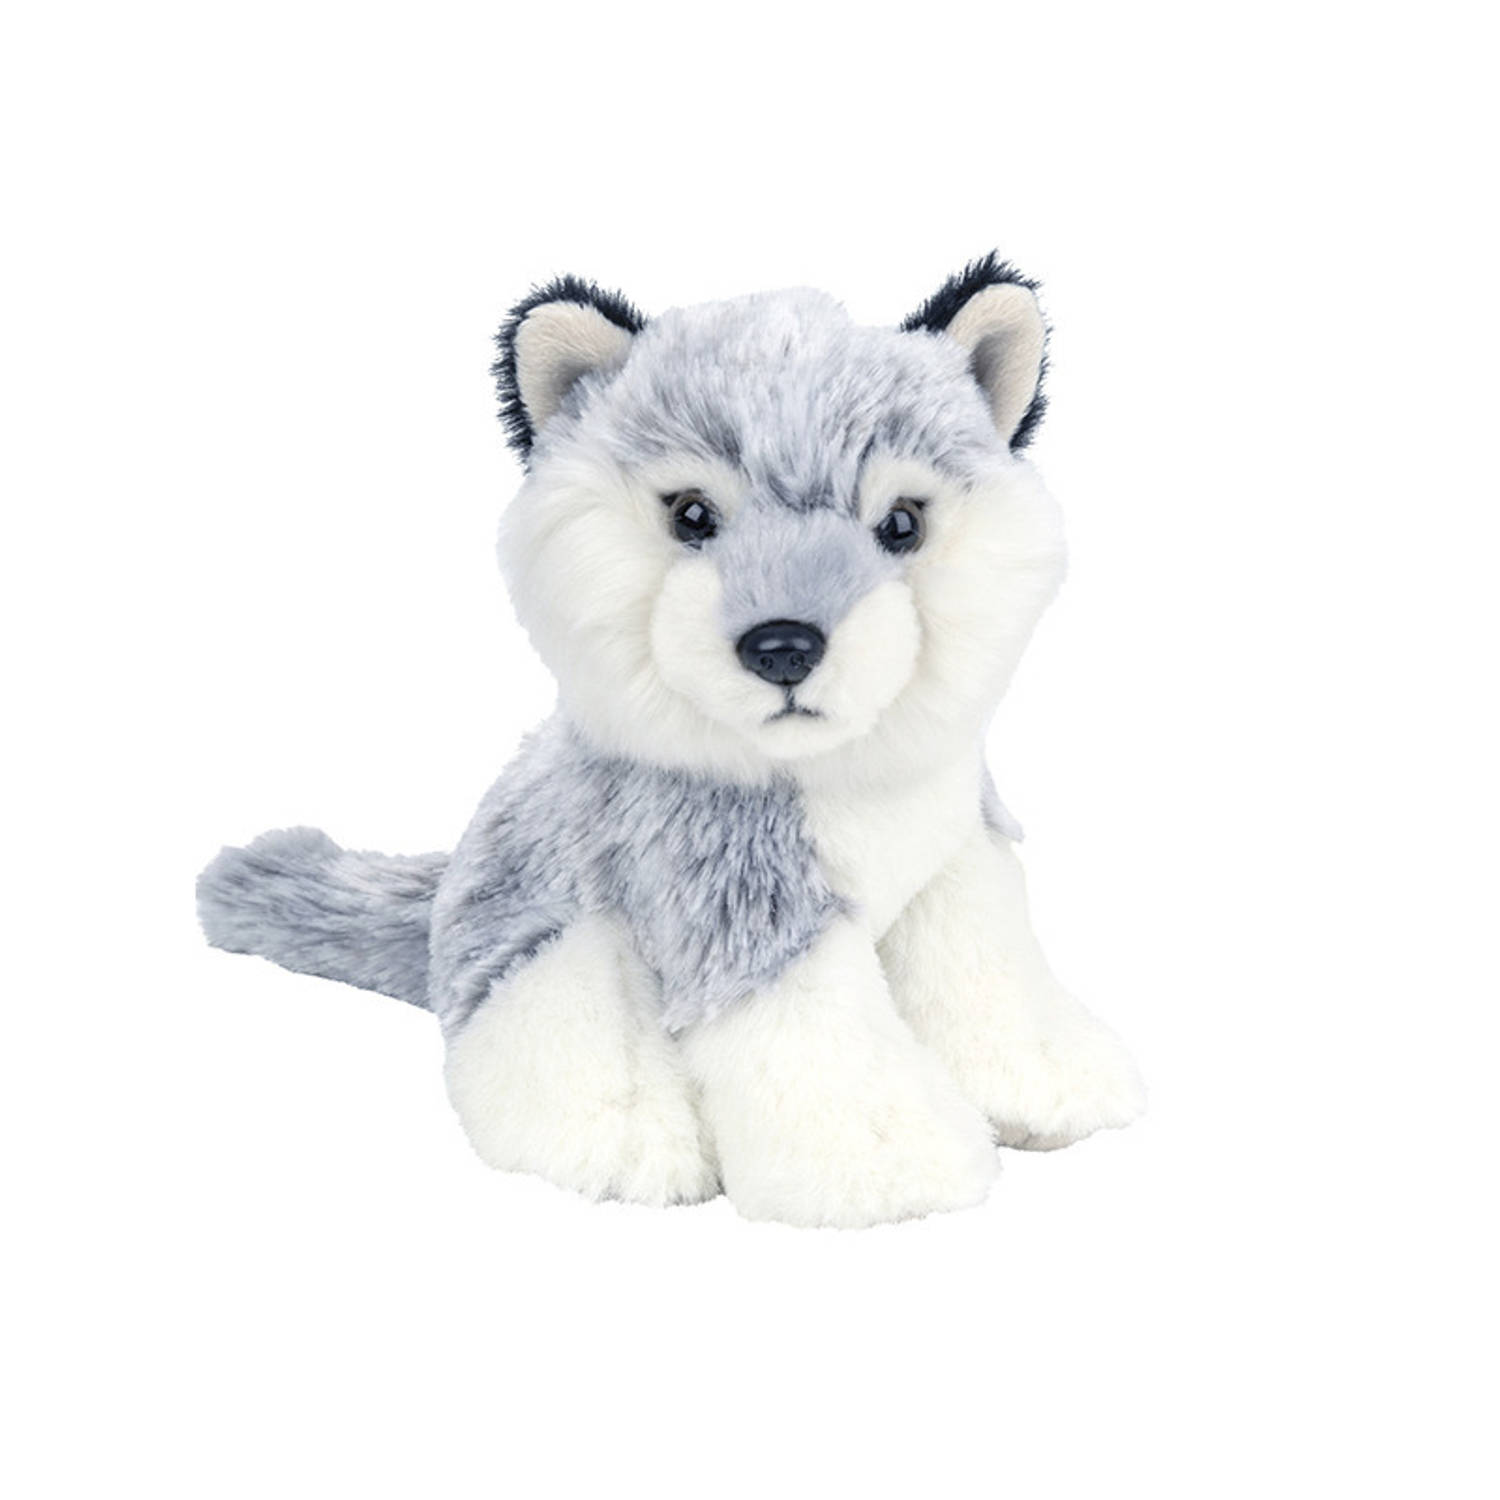 Pluche grijze Wolf puppy knuffel van 12 cm - Dieren speelgoed knuffels cadeau - Wolven